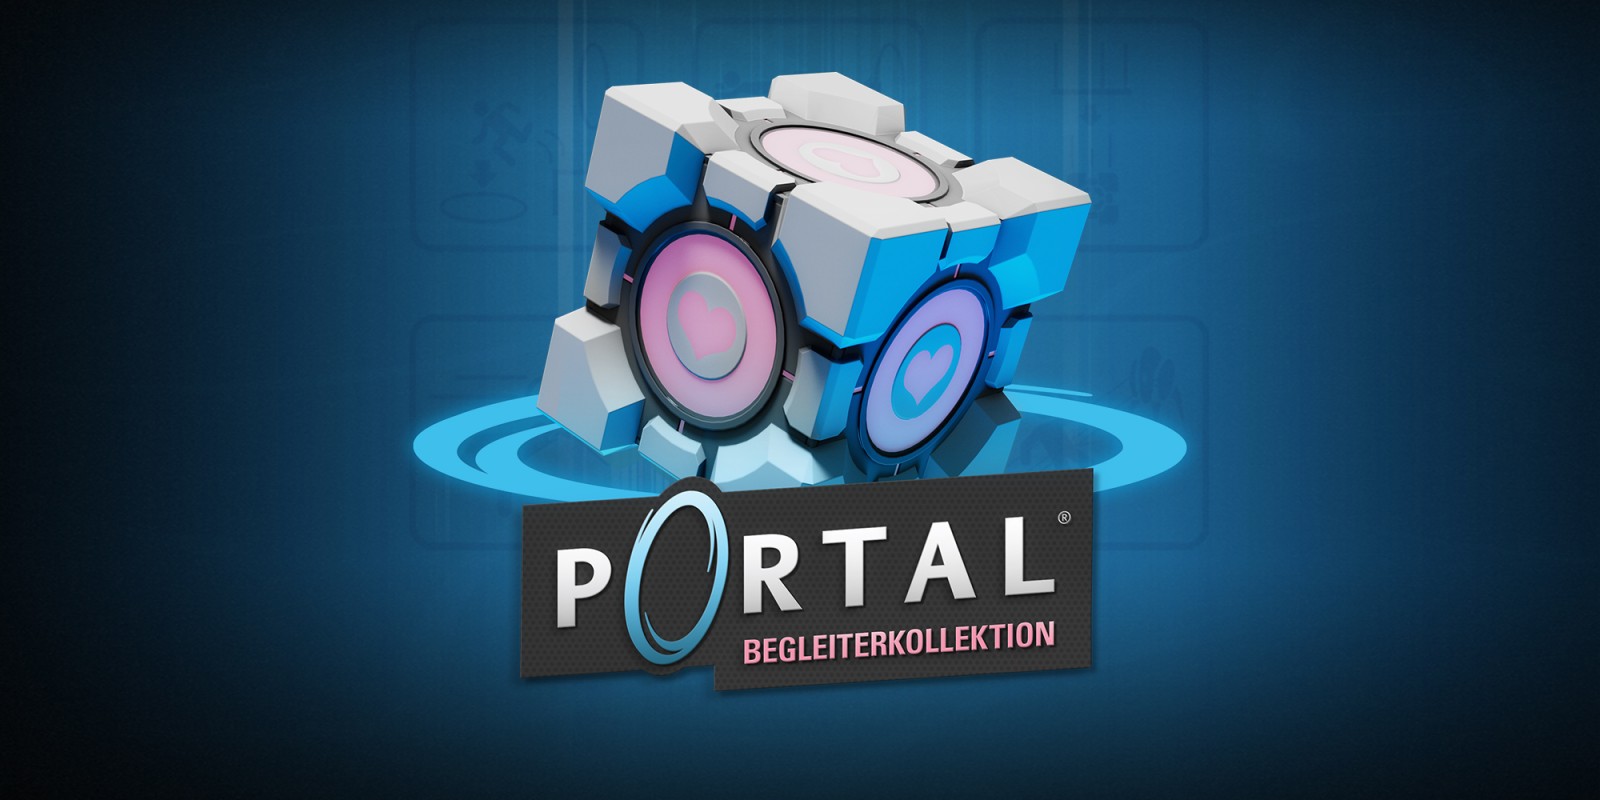 Portal: Begleiterkollektion